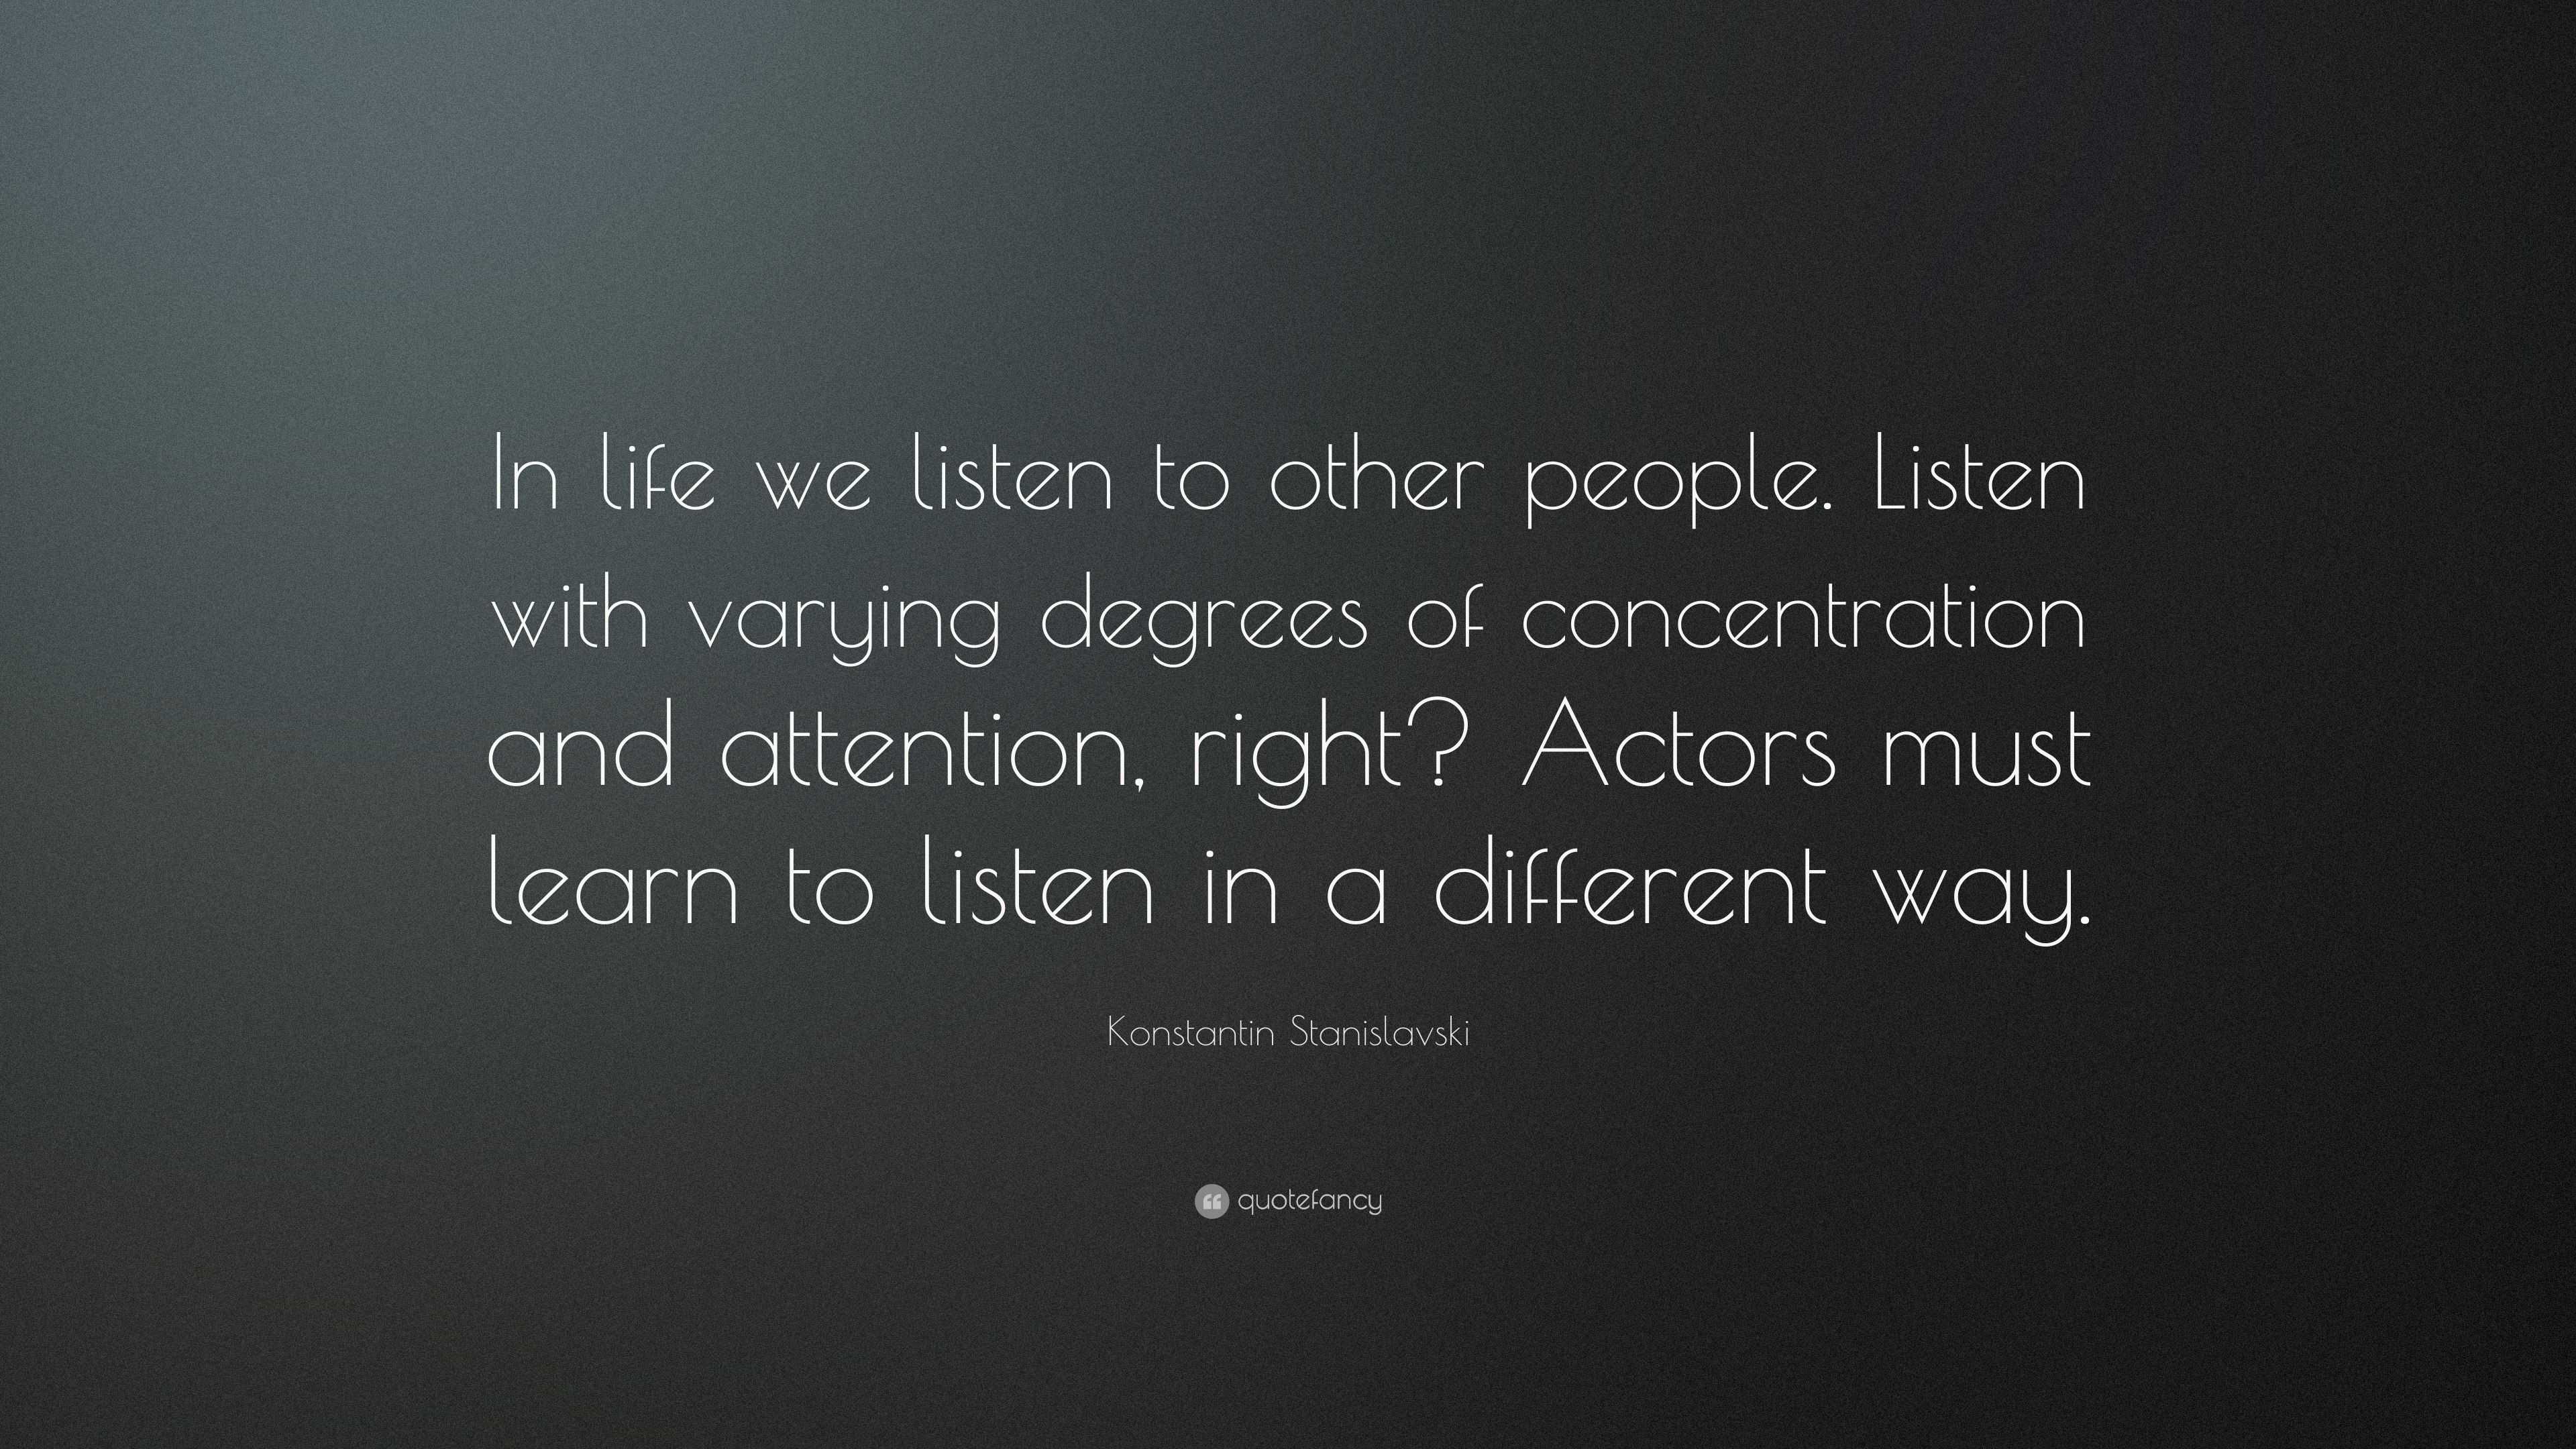 Konstantin Stanislavski Quote: “In life we listen to other people ...